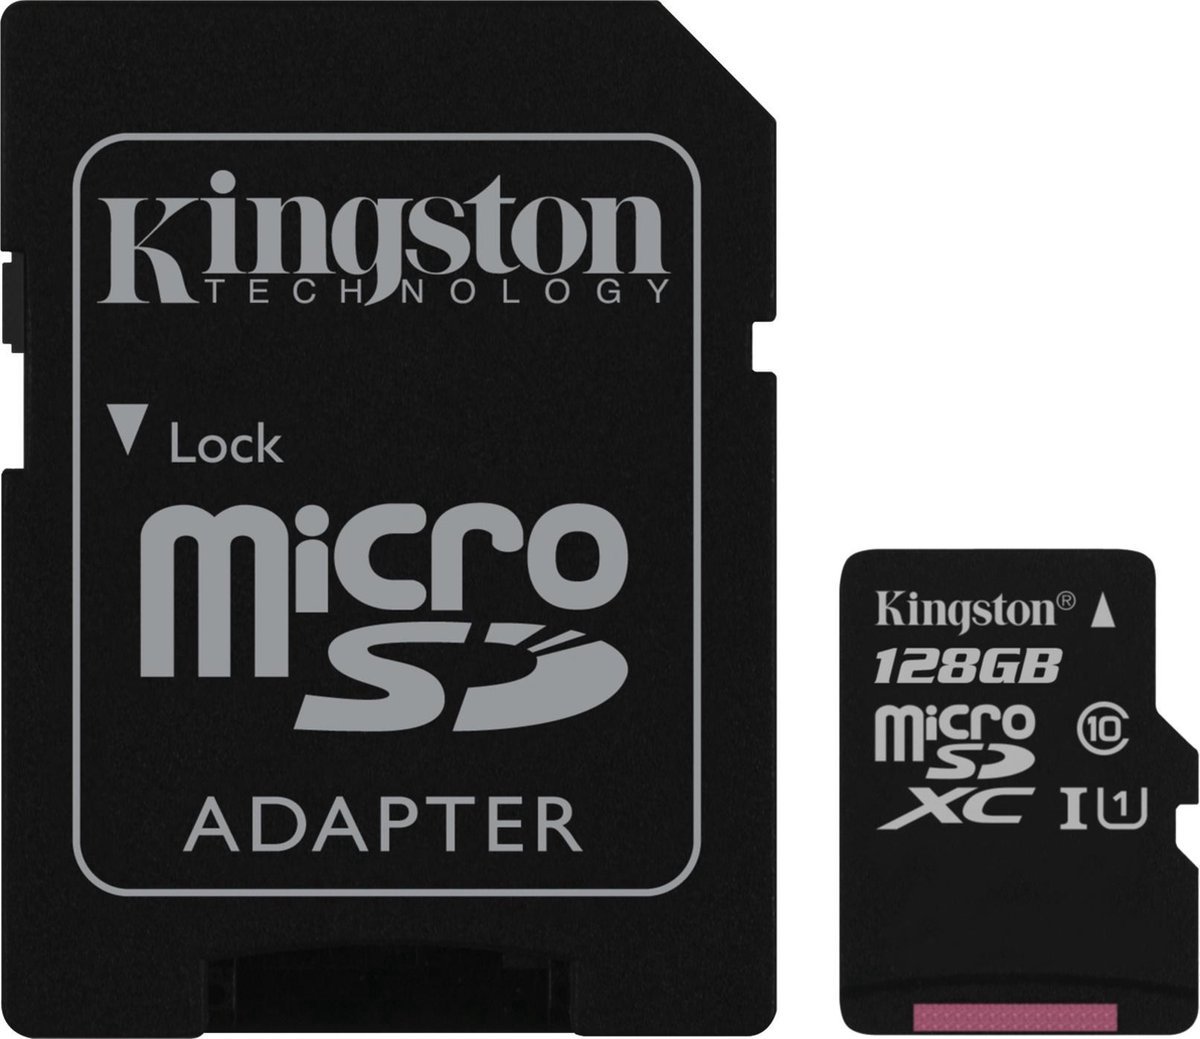 SanDisk 128 GB Ultra UHS I MicroSD-kort 140 MB/s R för smartphones